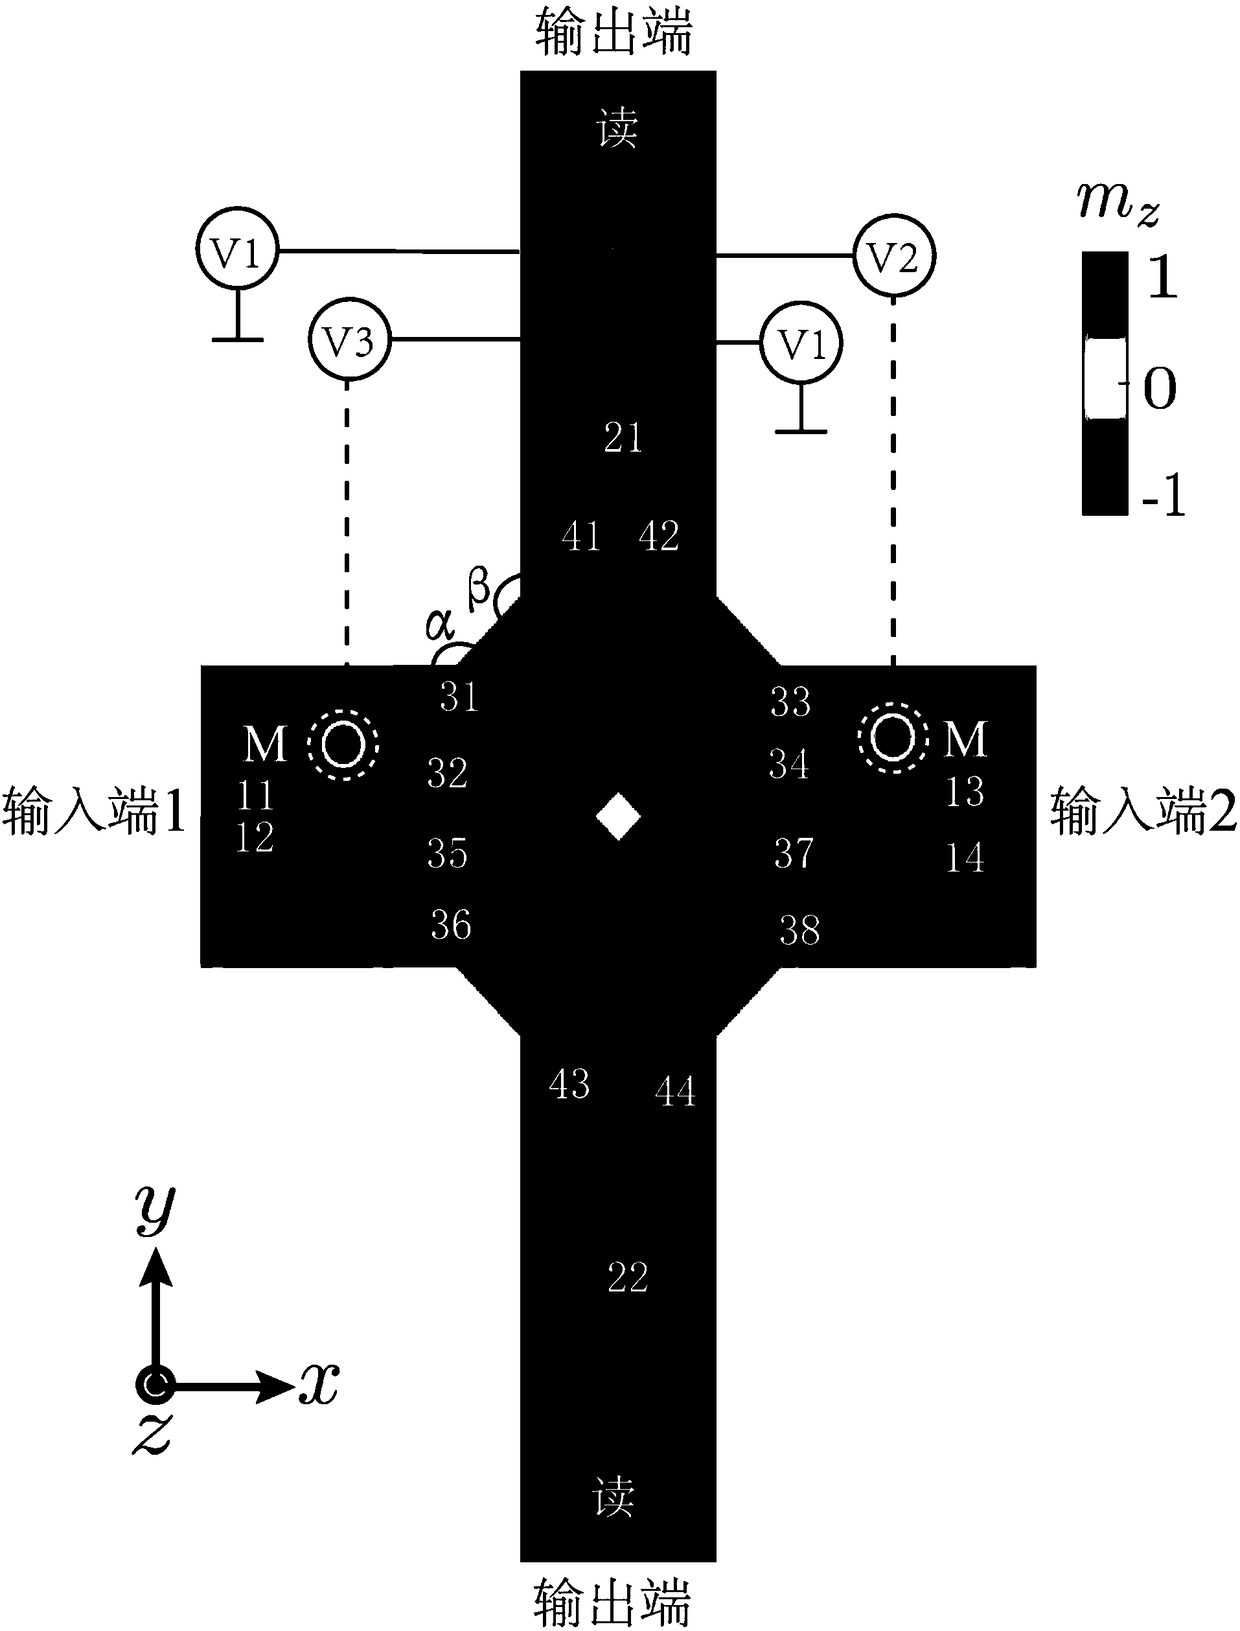 Reconfigurable logic gate based on magnetic Skyrmion